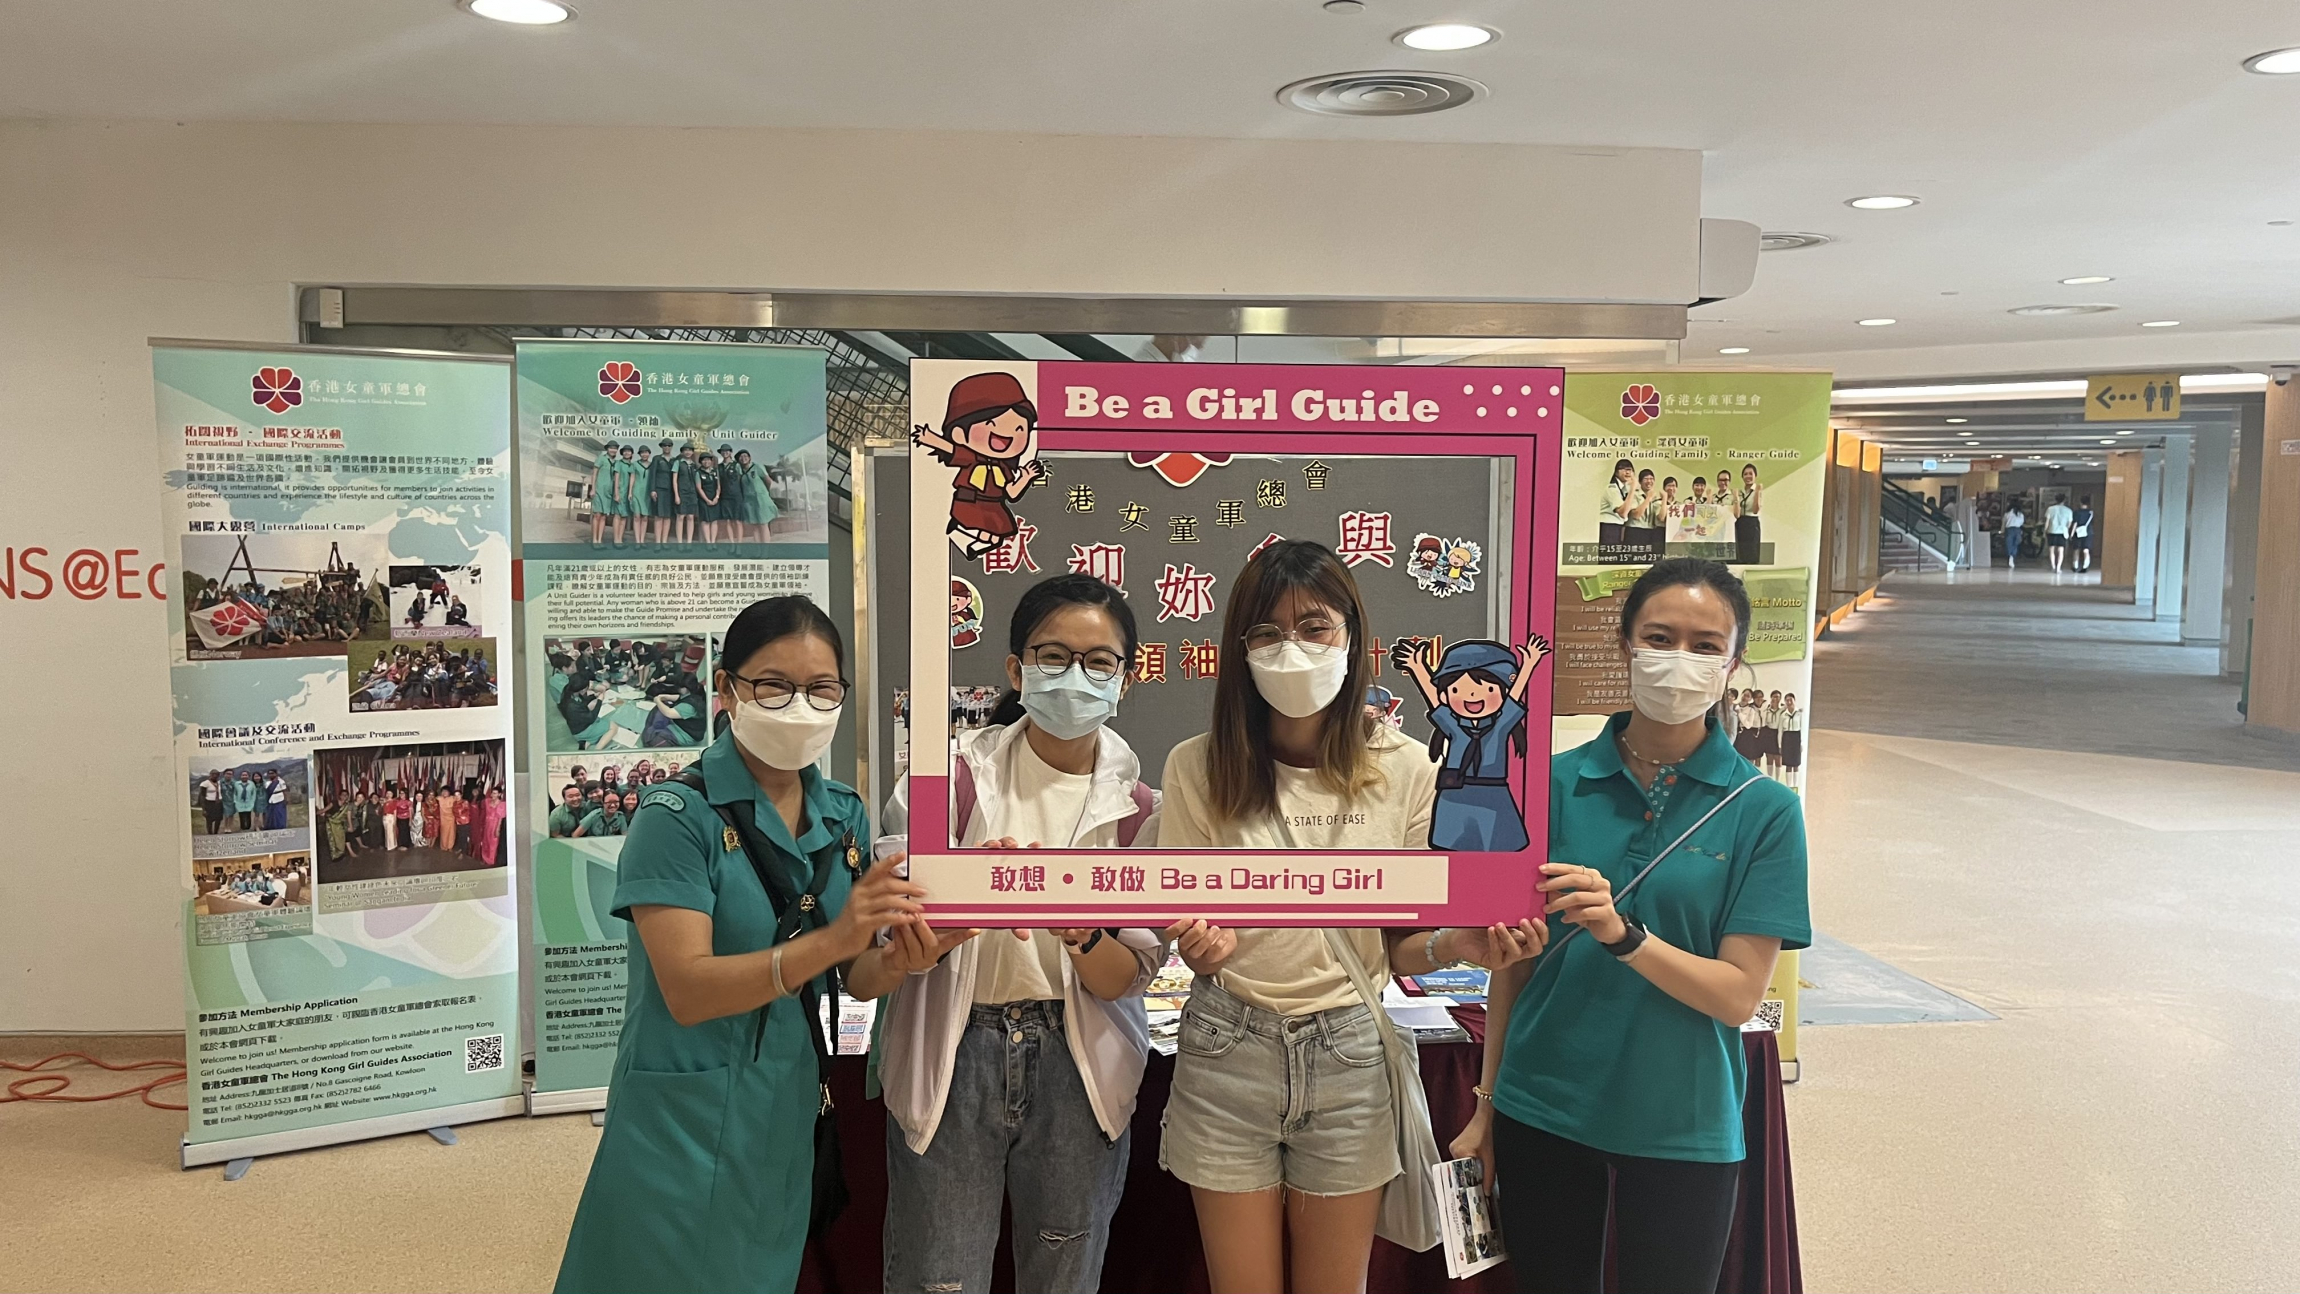 Self Photos / Files - The Hong Kong Girl Guides Association 香港女童軍總會